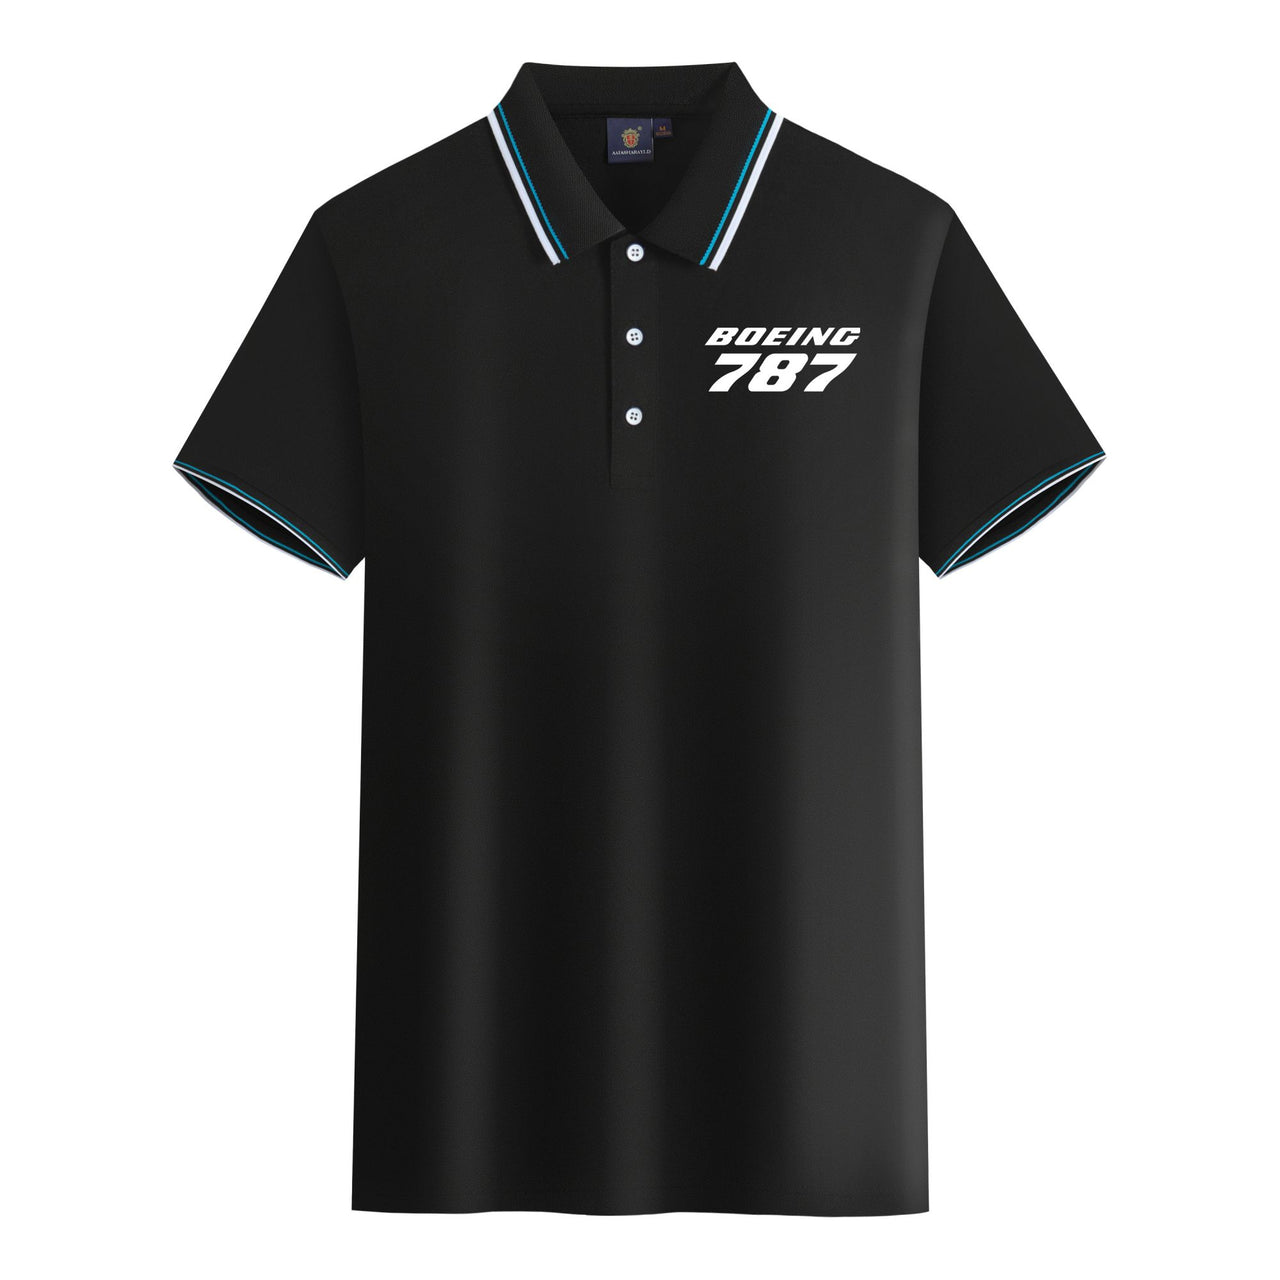 Boeing 787 & Text Designed Stylish Polo T-Shirts